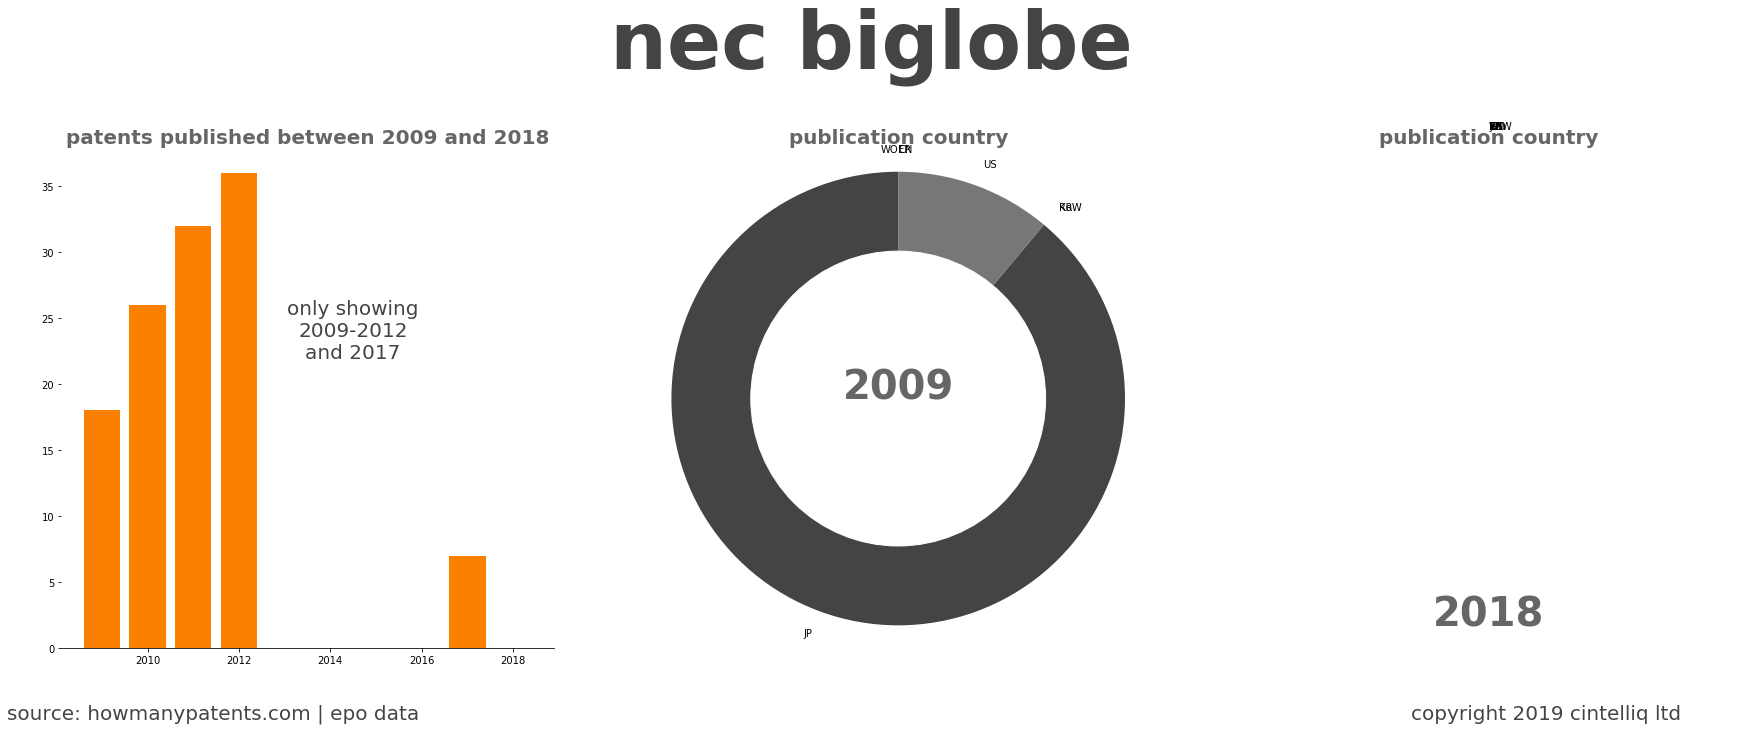 summary of patents for Nec Biglobe